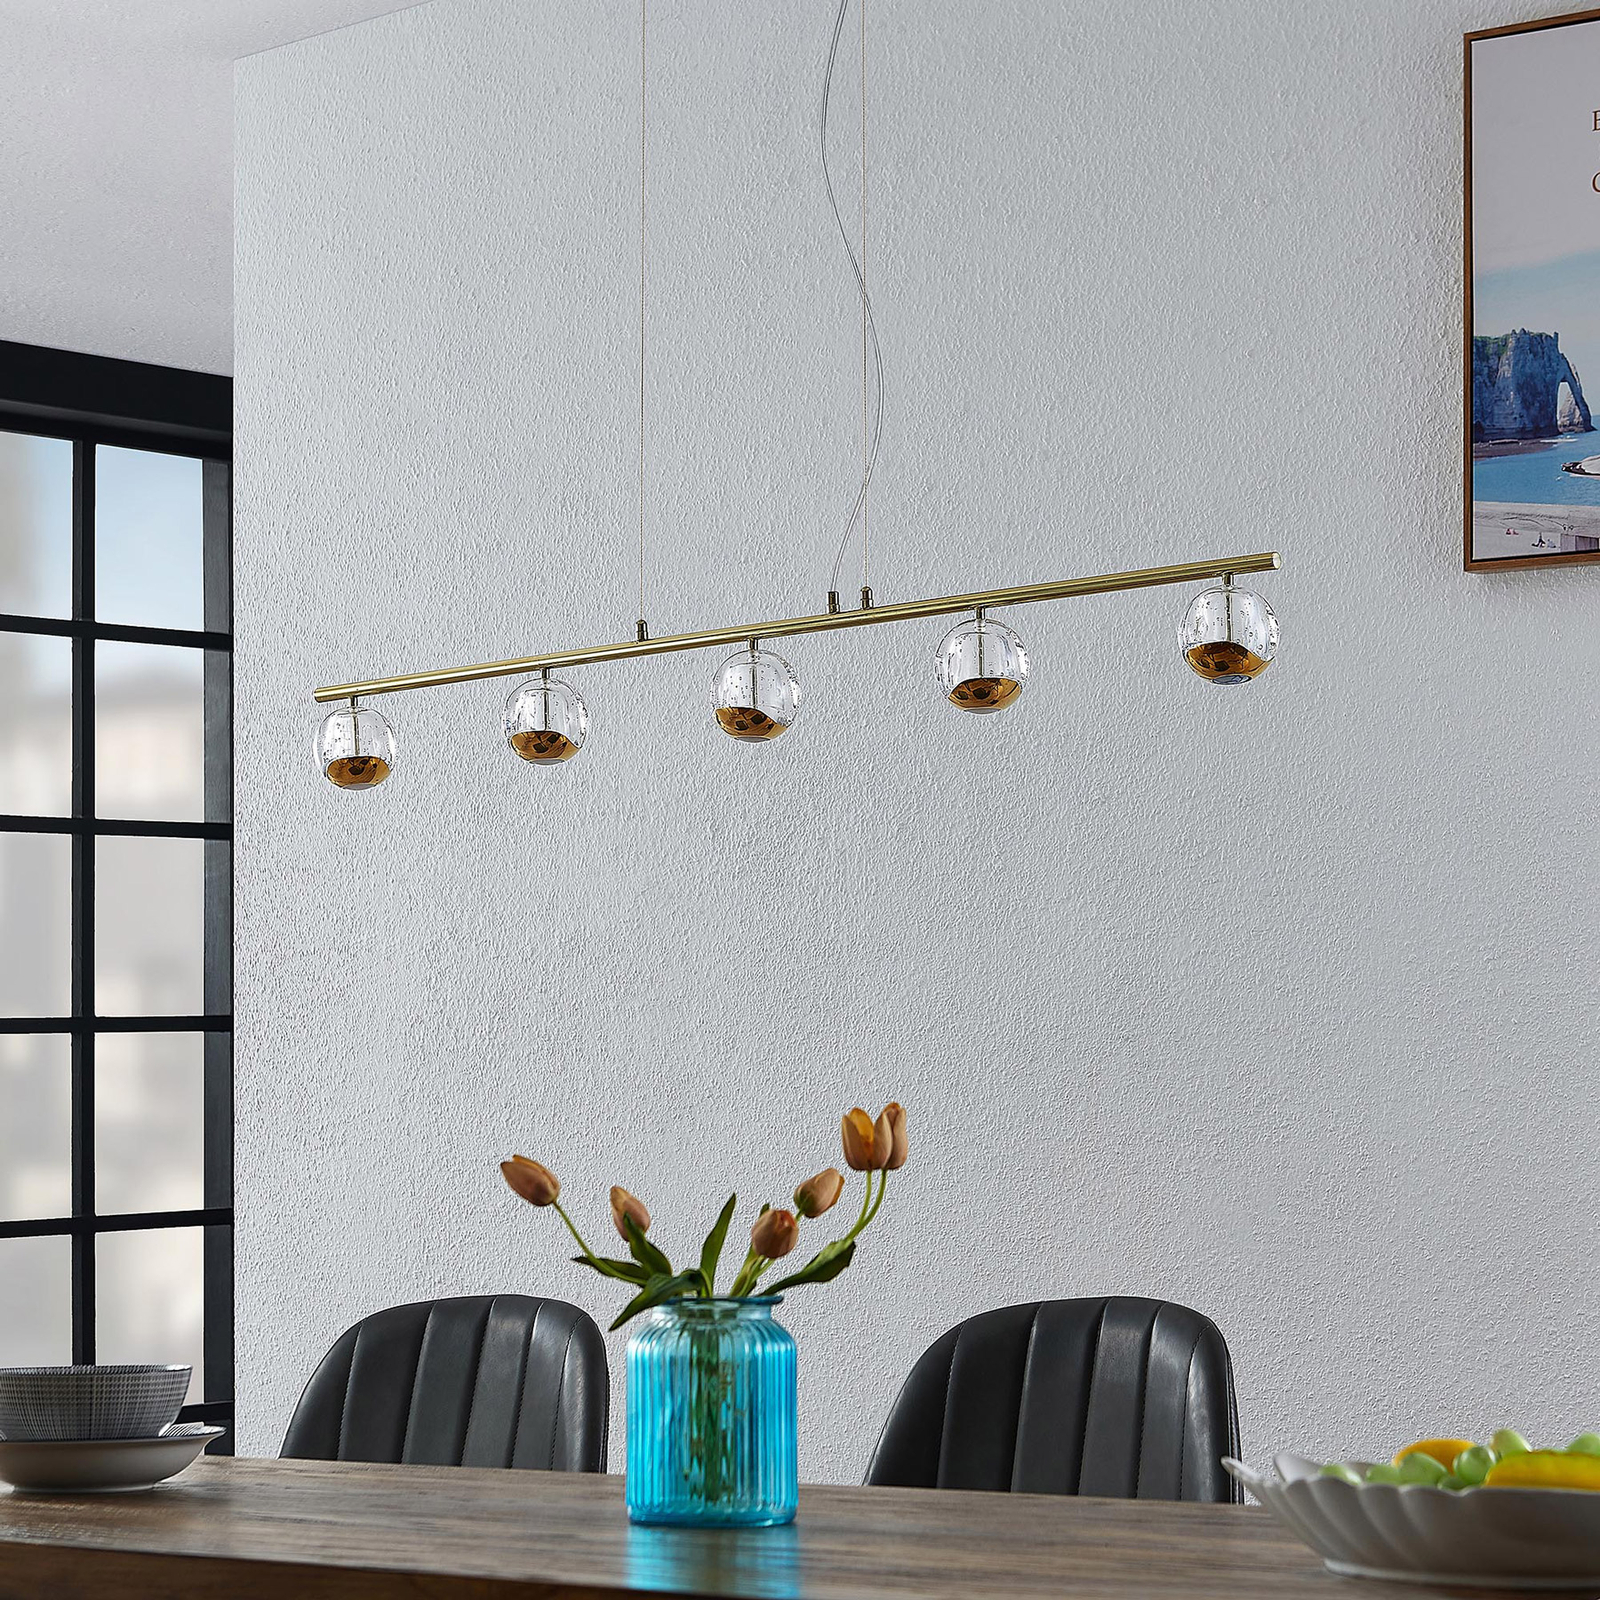 Lucande Kilio LED hanging light, 5-bulb, gold